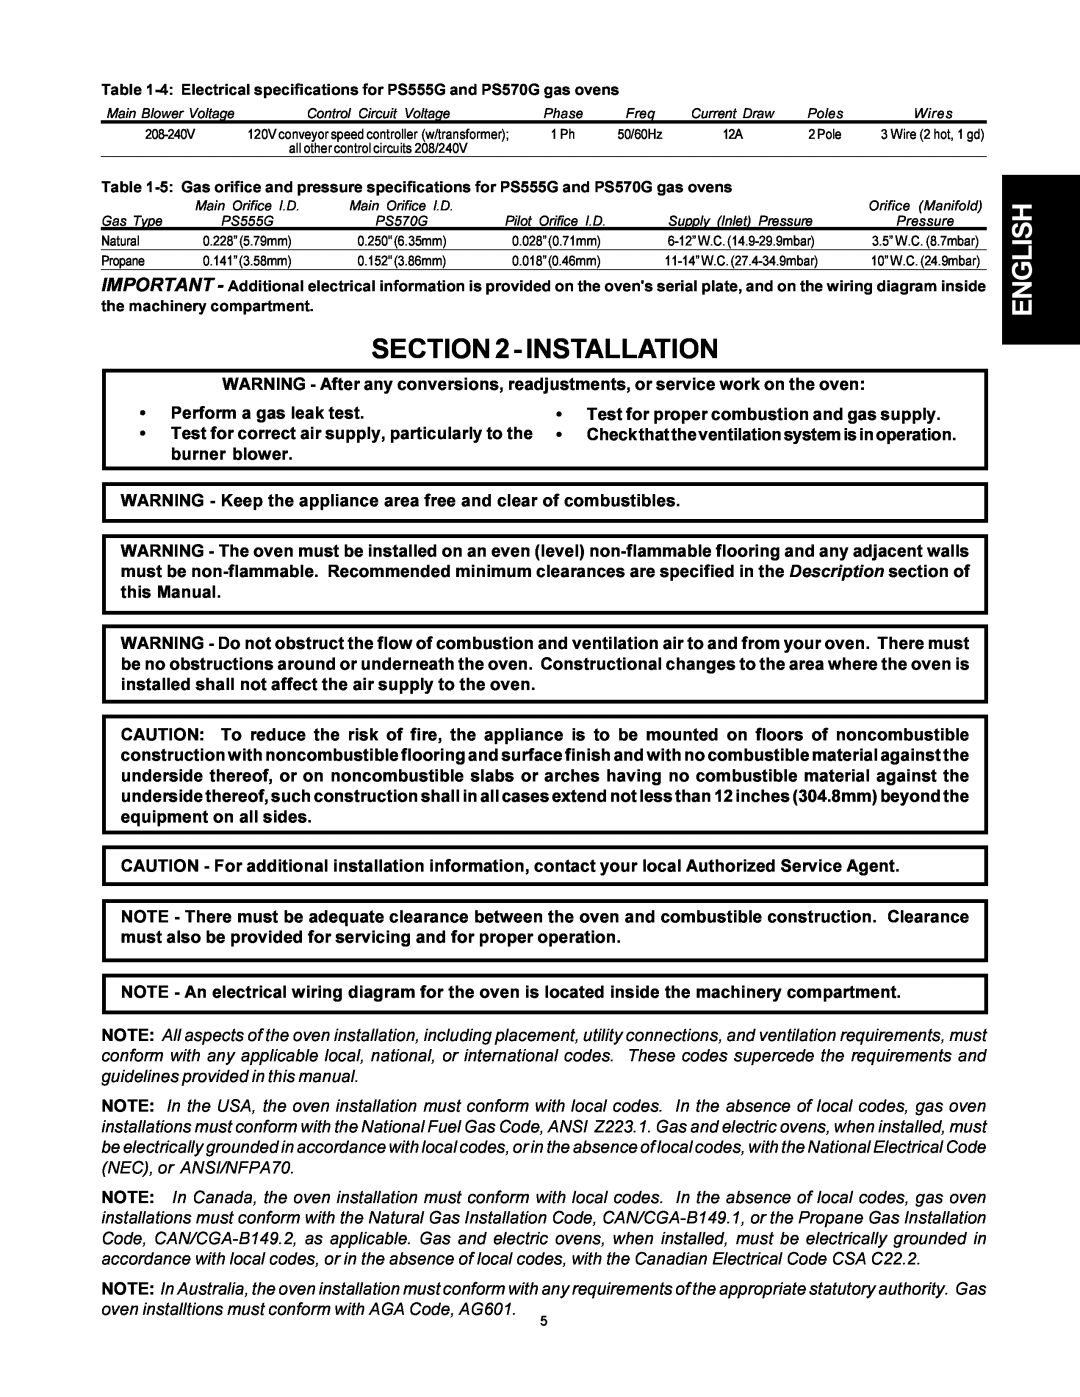 Middleby Marshall PS500 installation manual Installation, English 